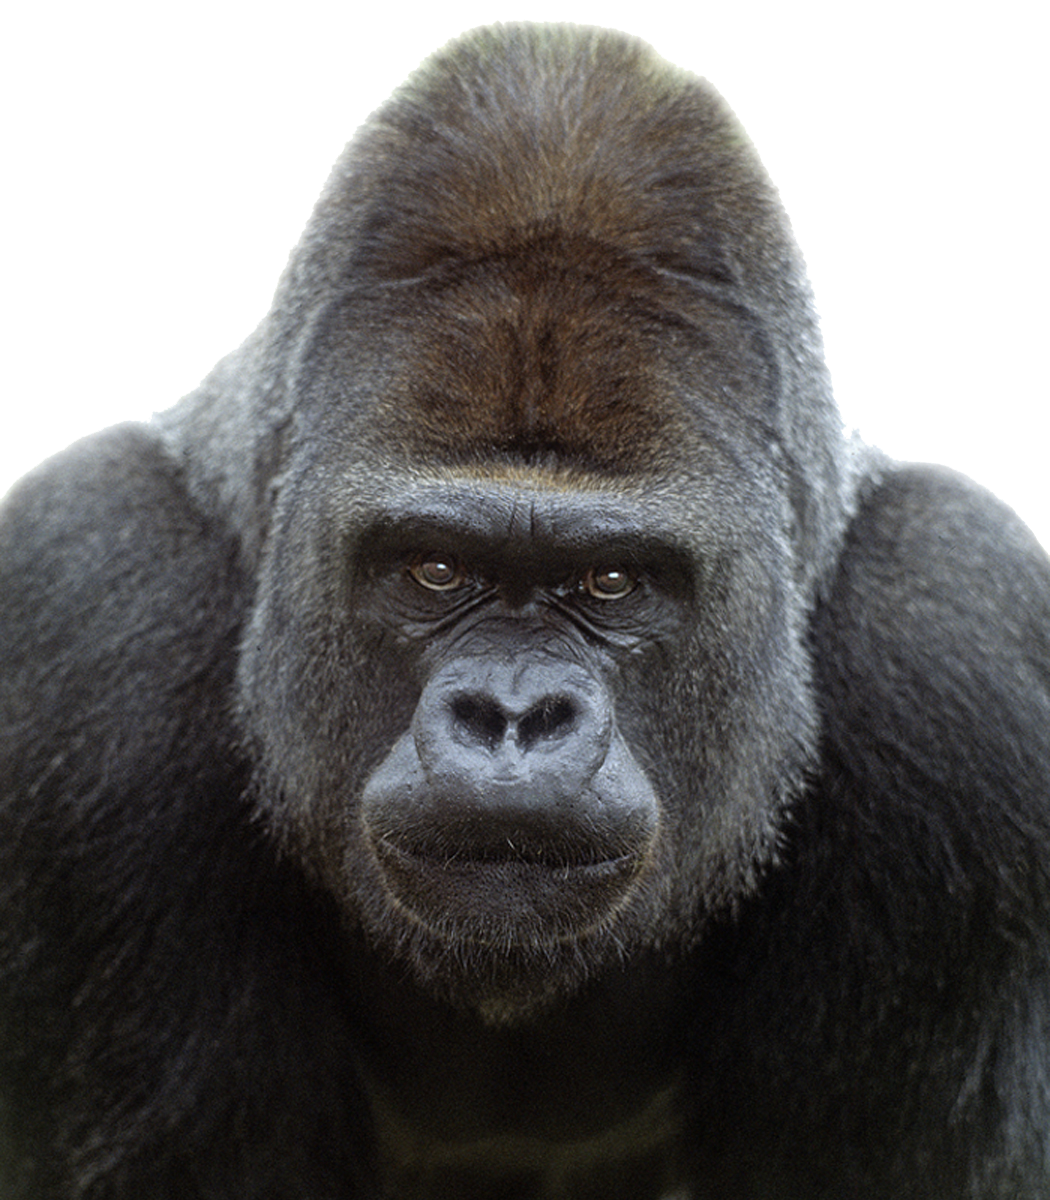 Big Gorilla Transparent Image PNG Image HD Wallpapers Download For